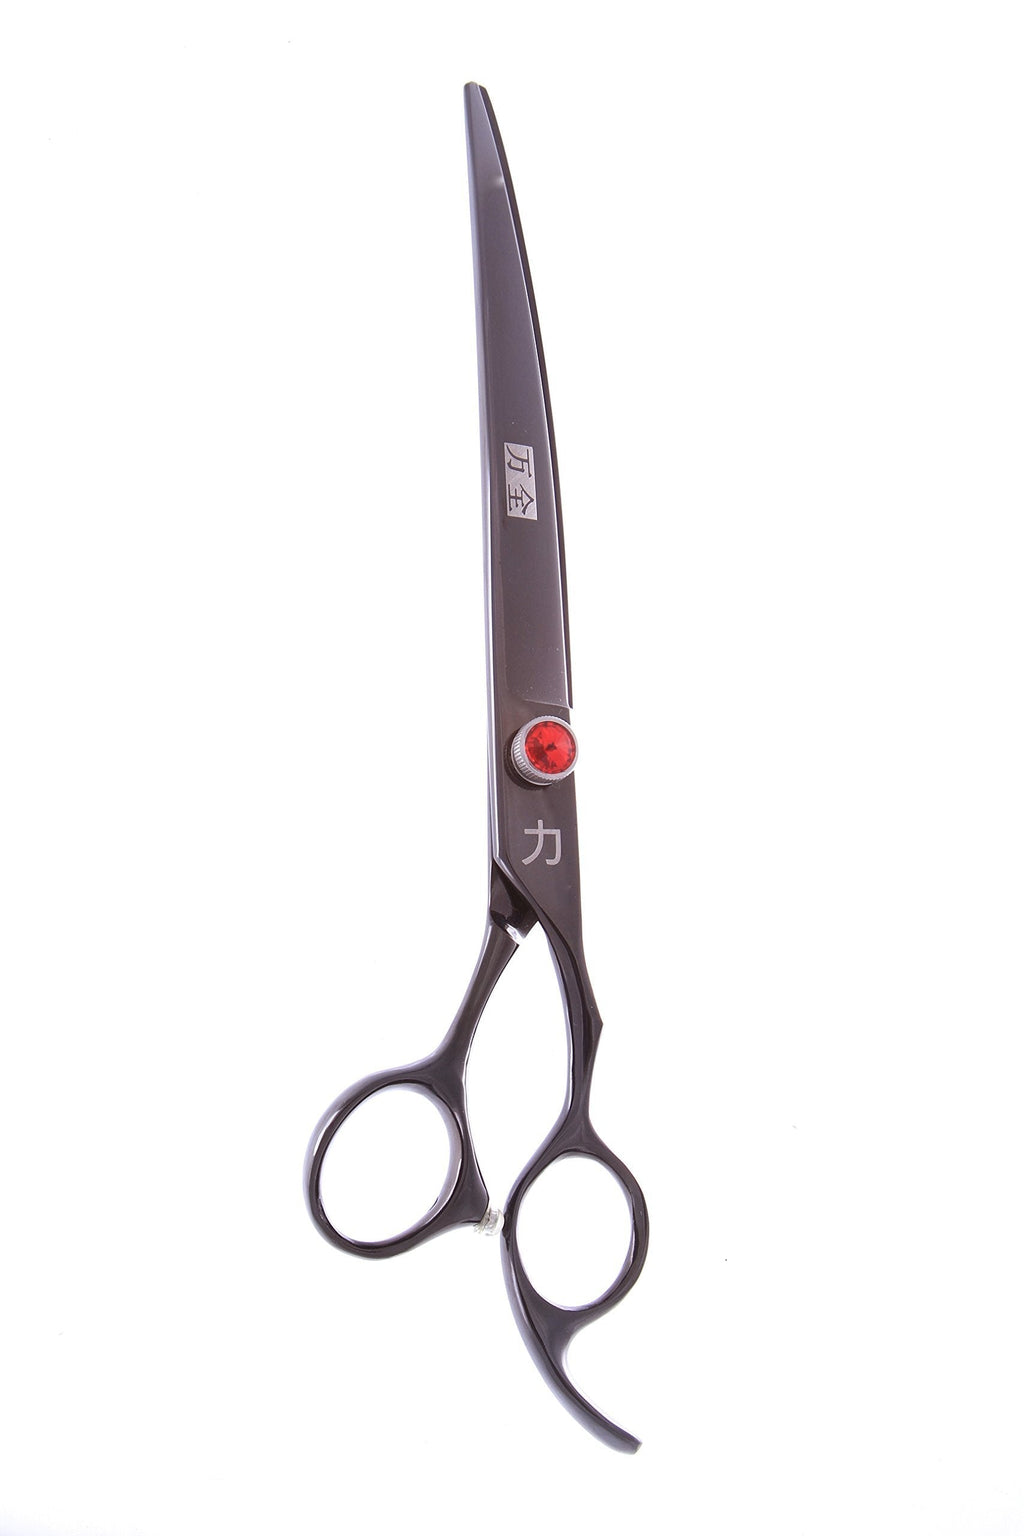 [Australia] - ShearsDirect Curved Titanium Shear with Gem Stone Tension and Ergonomic Handle Design Case Included Scissors, 8.5", Black 